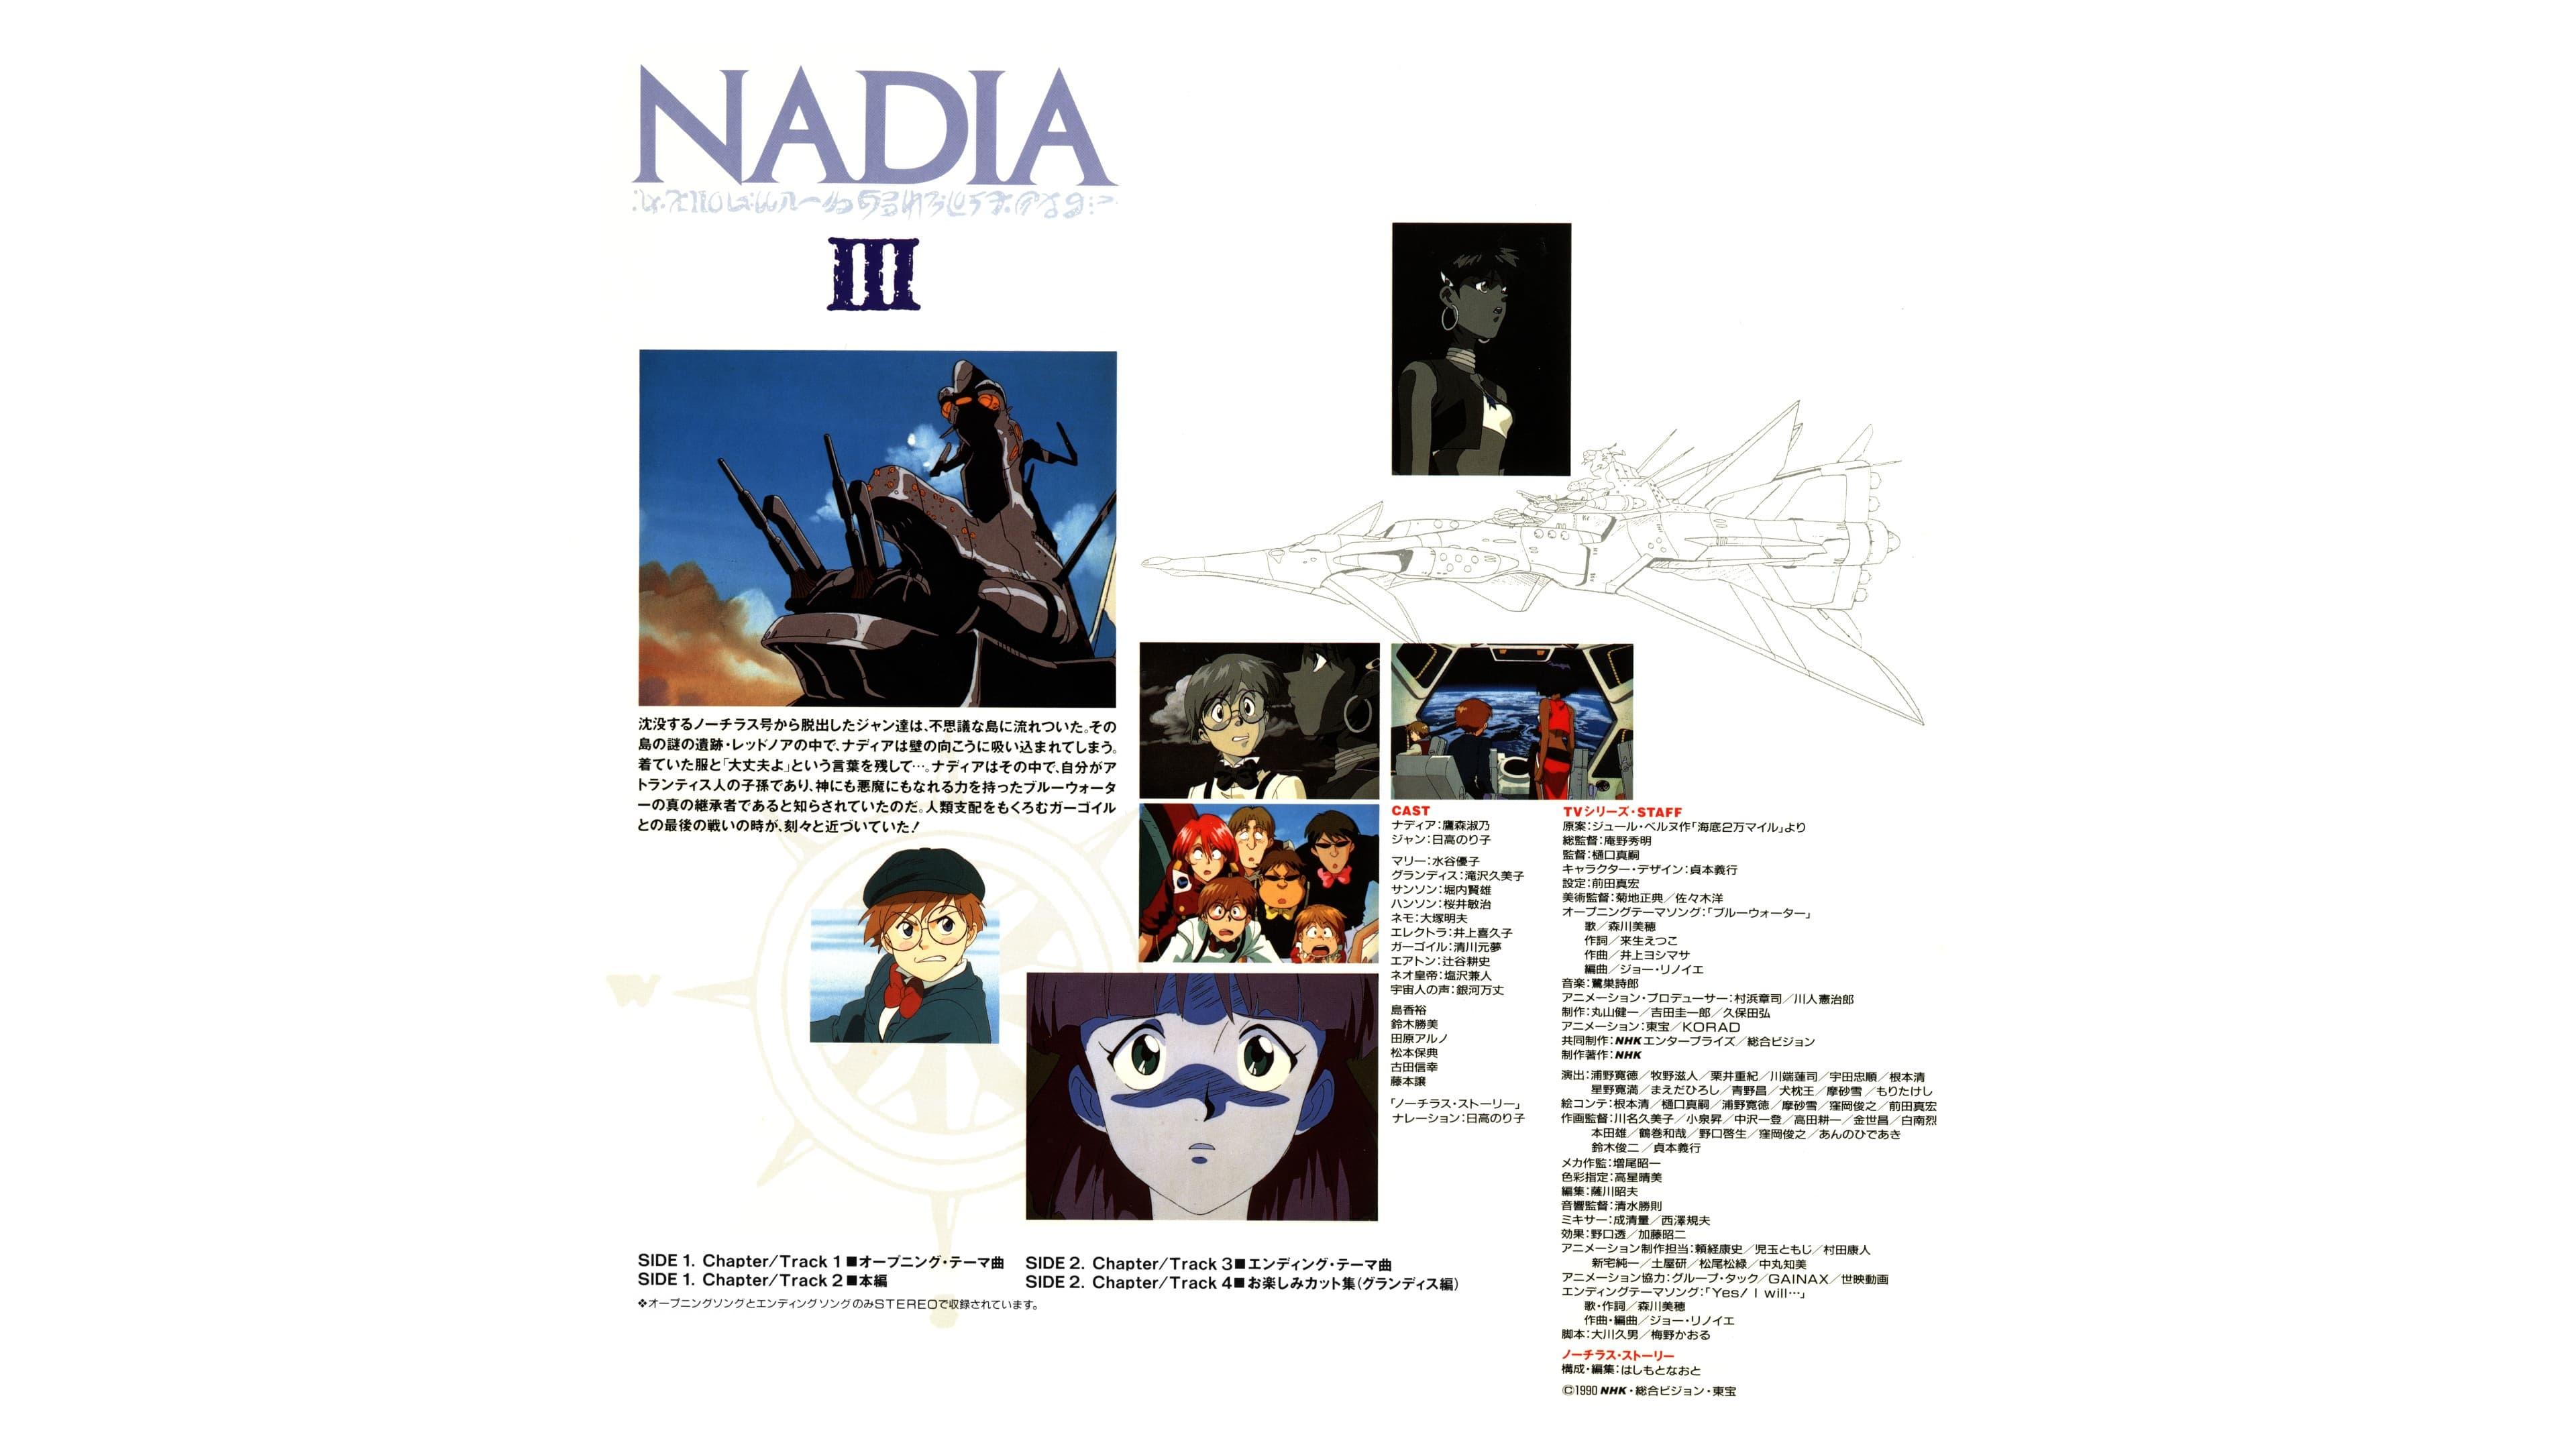 Nadia: The Secret of Blue Water - Nautilus Story III backdrop